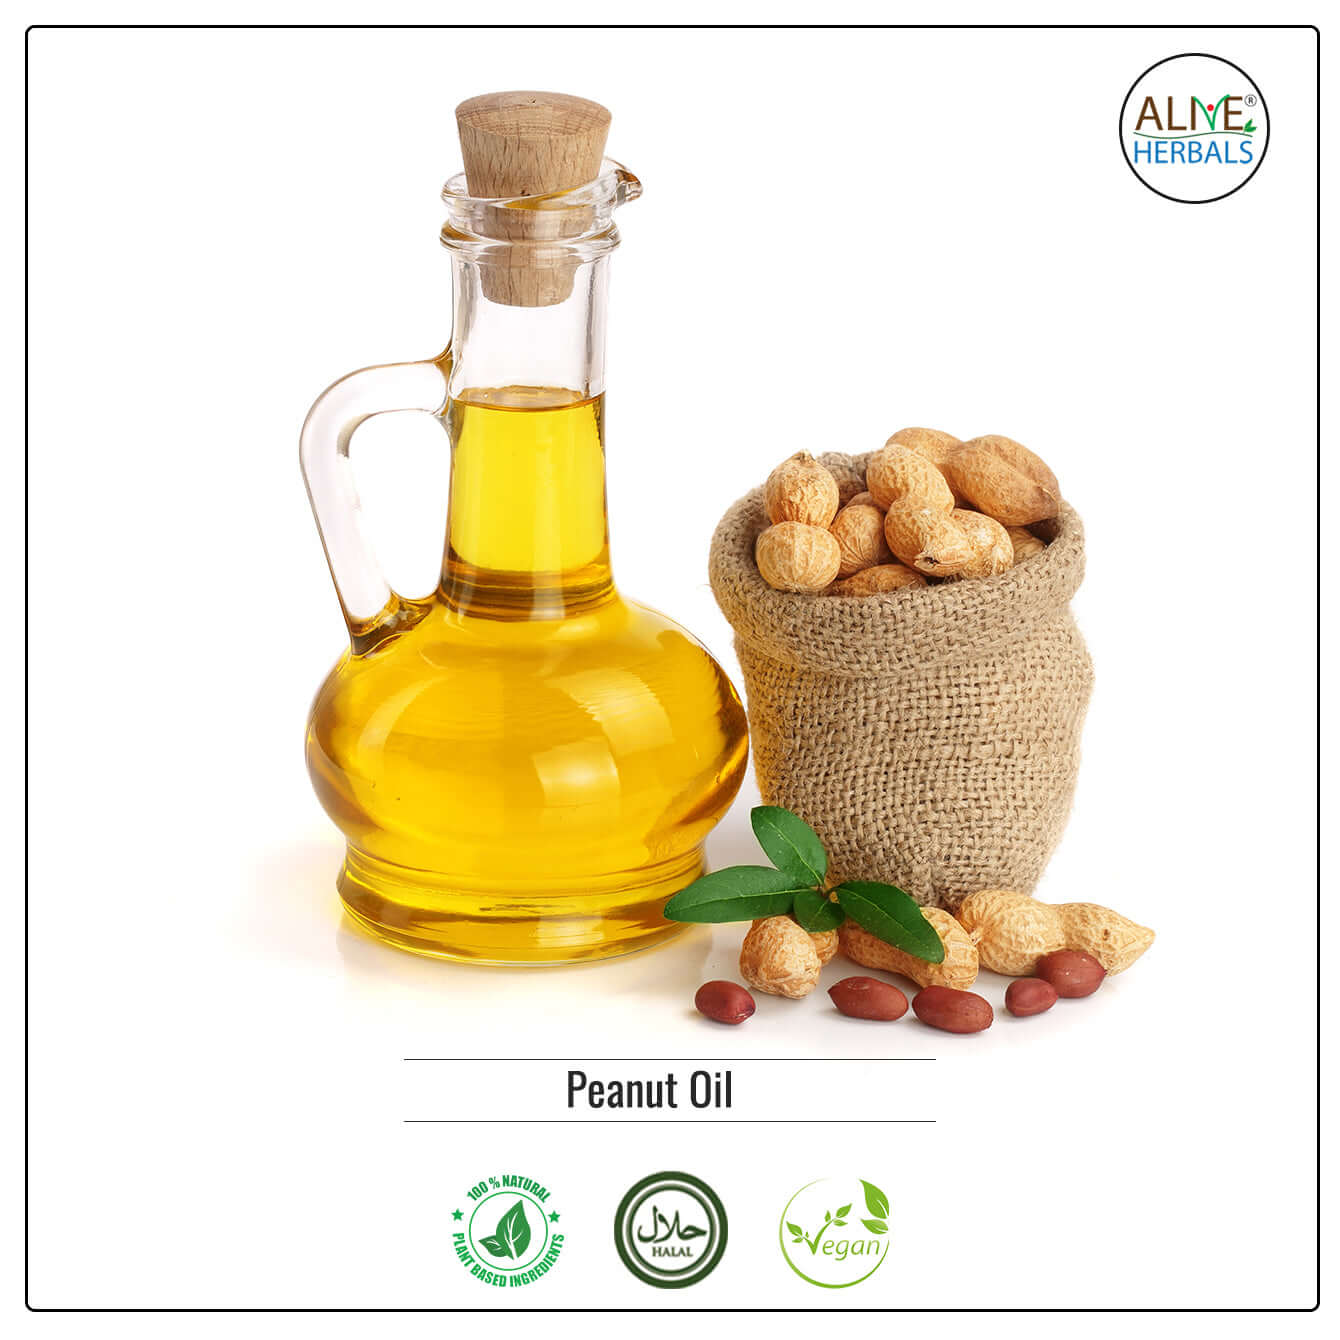 Peanut Oil - Shop at Natural Food Store | Alive Herbals.